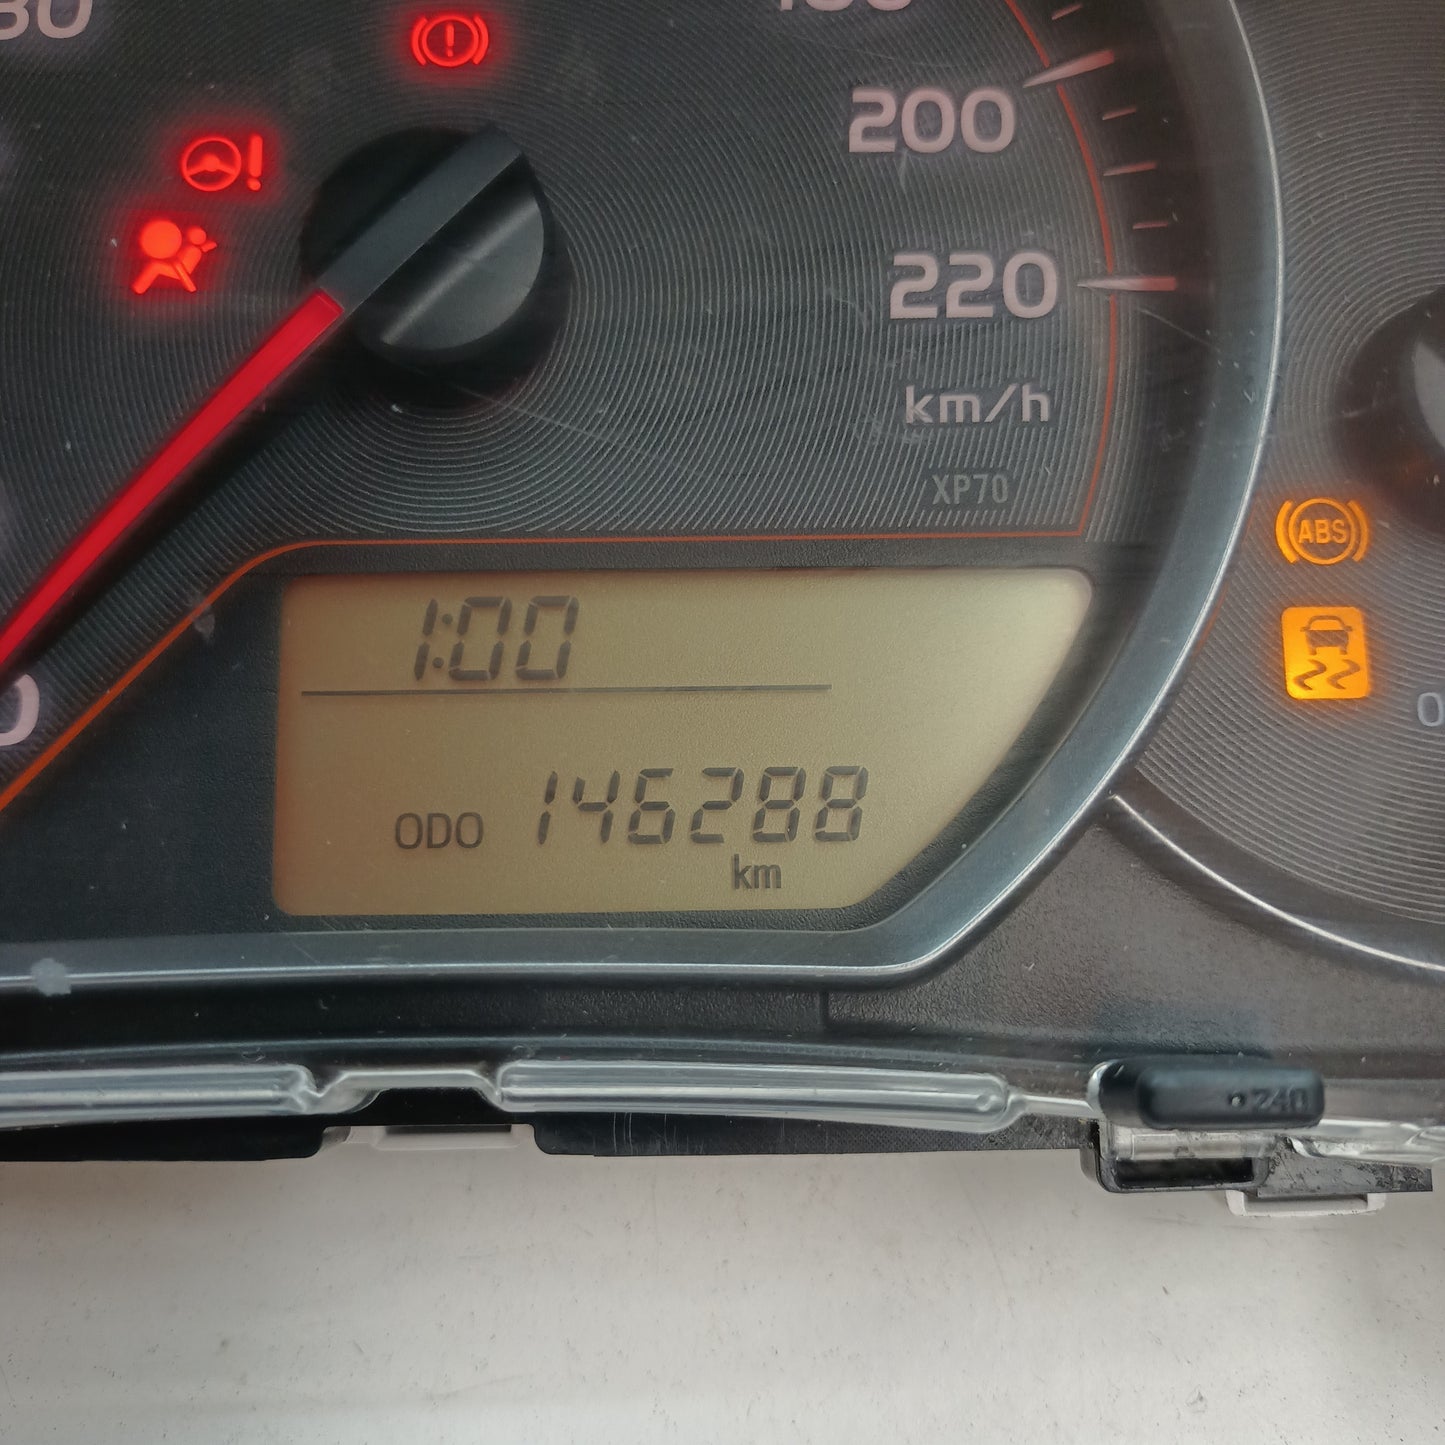 Toyota Yaris Hatchback Instrument Cluster NCP13# 2011 2012 2013 2014 146288 km